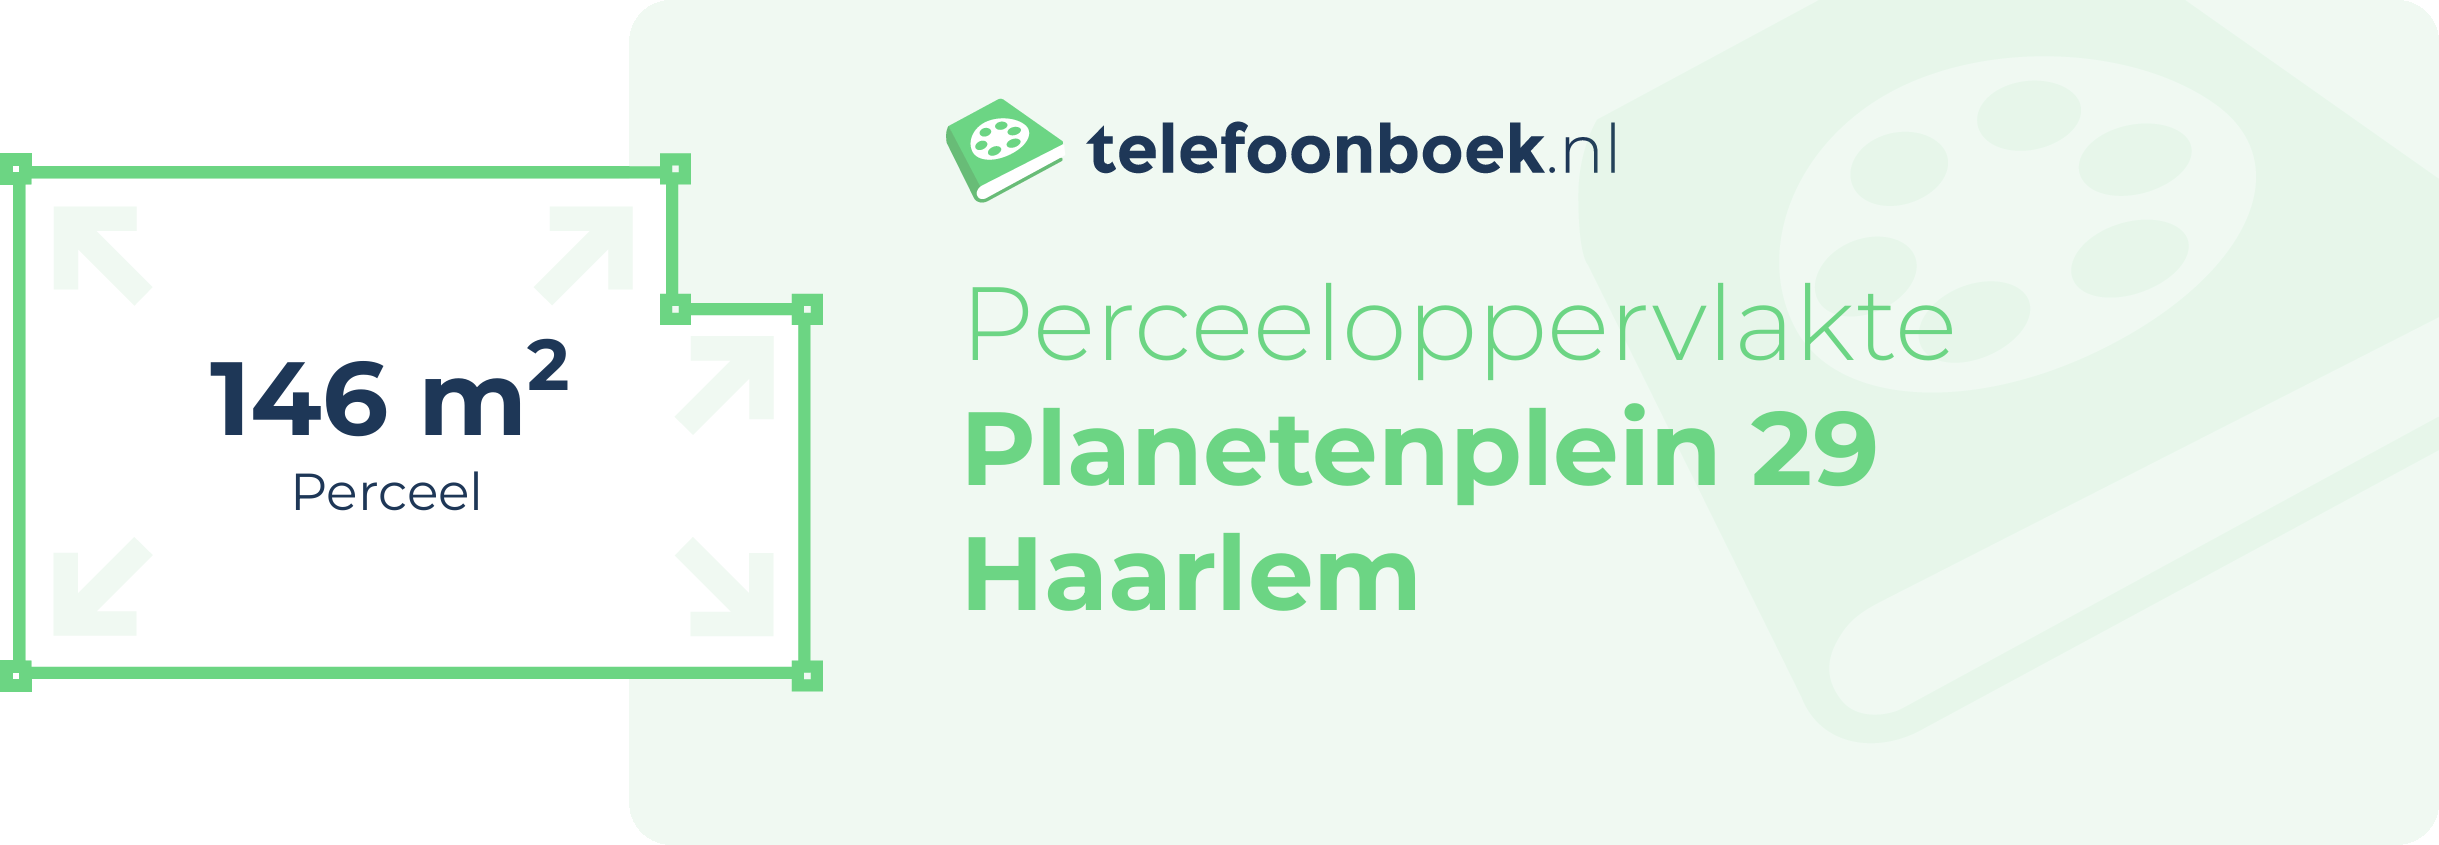 Perceeloppervlakte Planetenplein 29 Haarlem